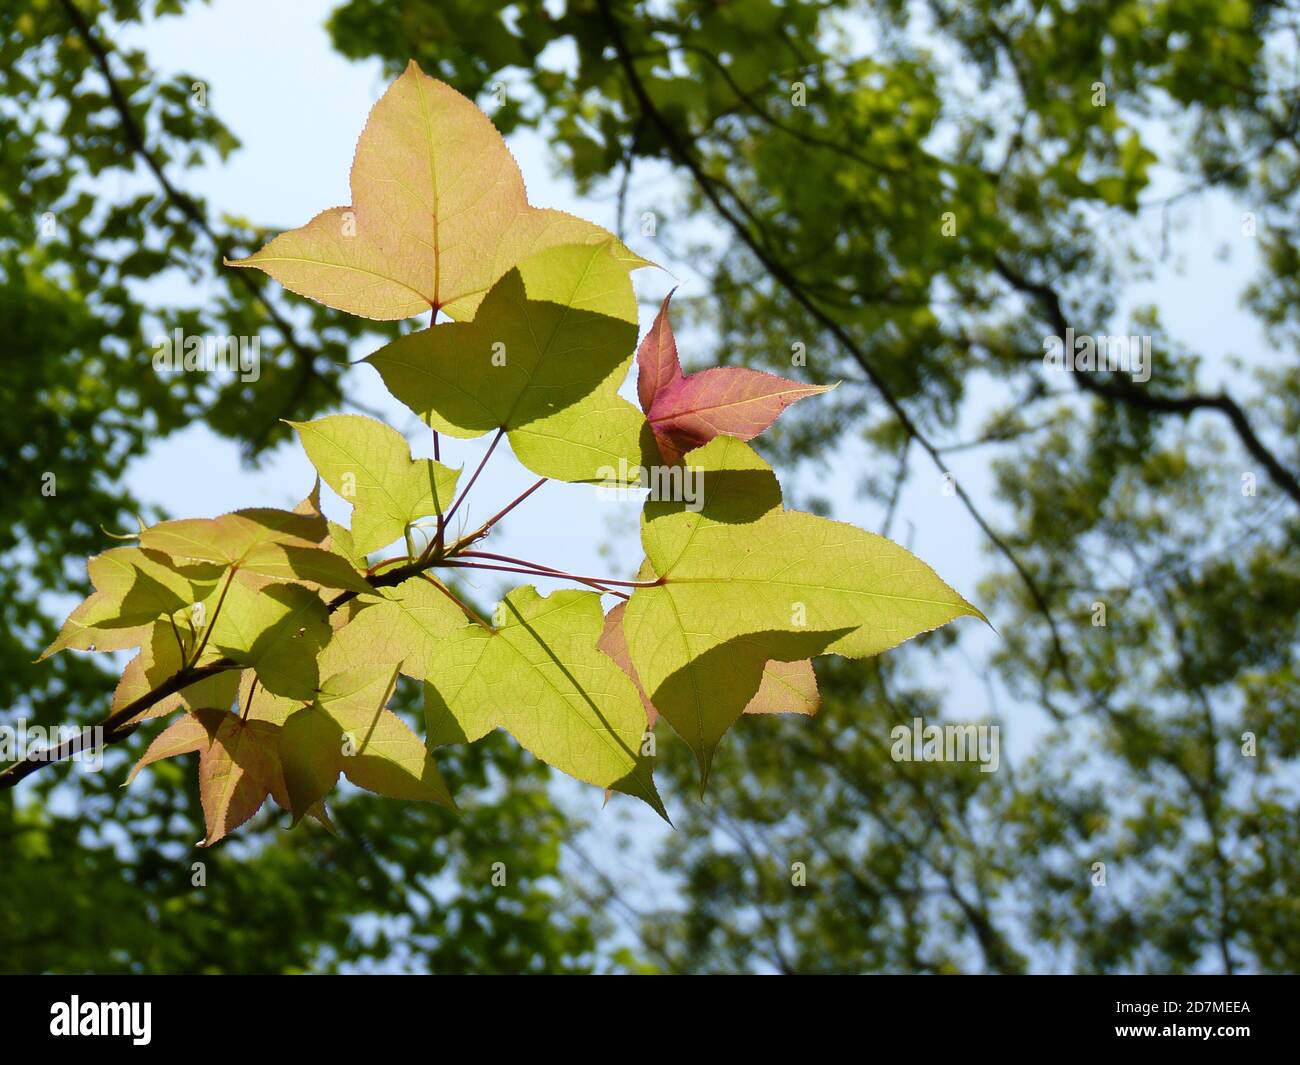 Selective focus shot of fresh foliage of Chinese sweet gum plant Stock Photo